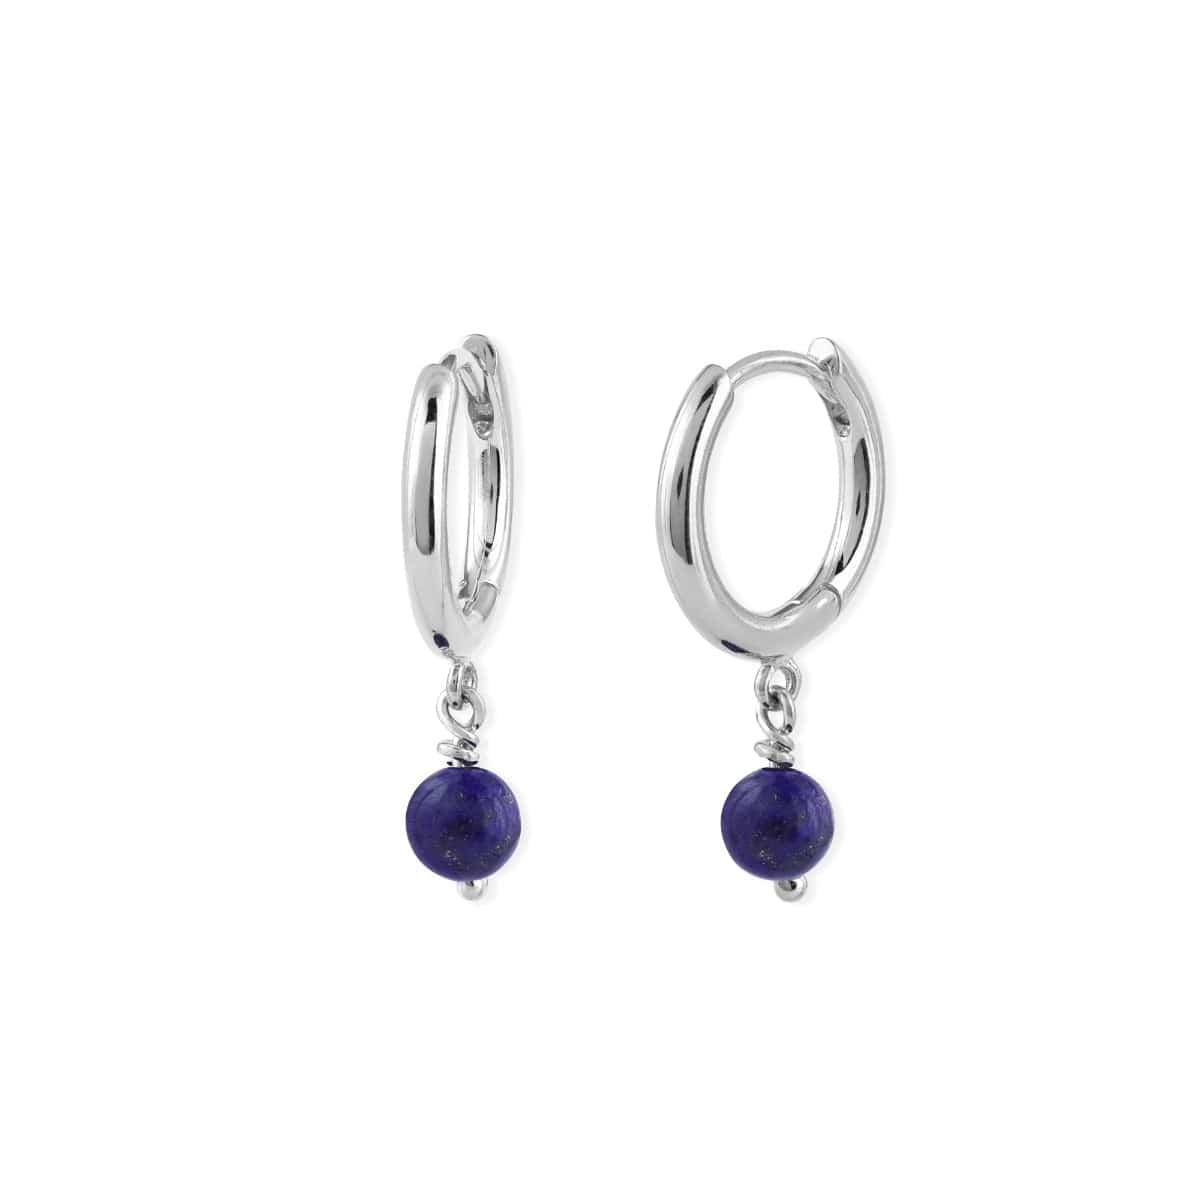 Boma Jewelry Earrings Lapis Lazuli / Sterling Silver Treasured Drop Huggies